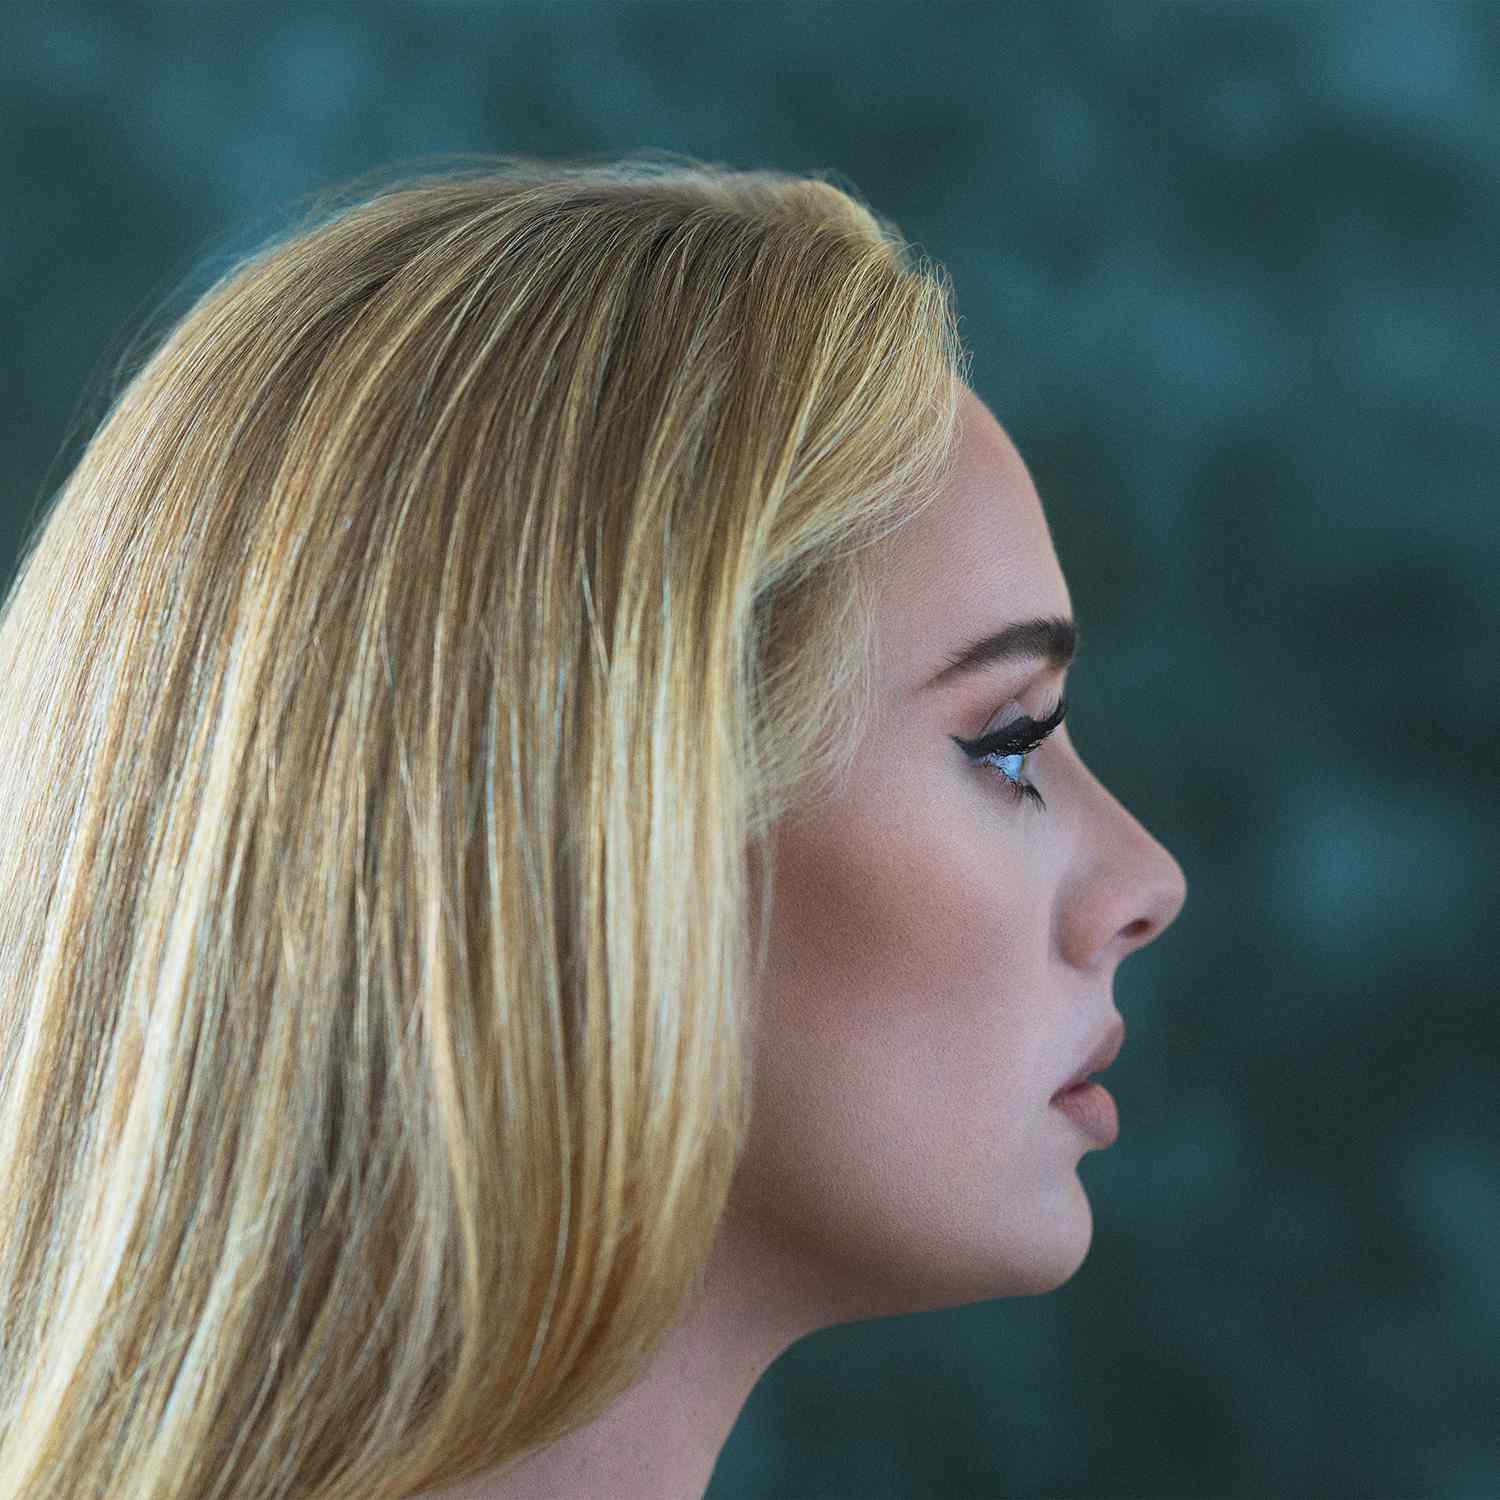 Adele Drops New Single 'Easy on Me'